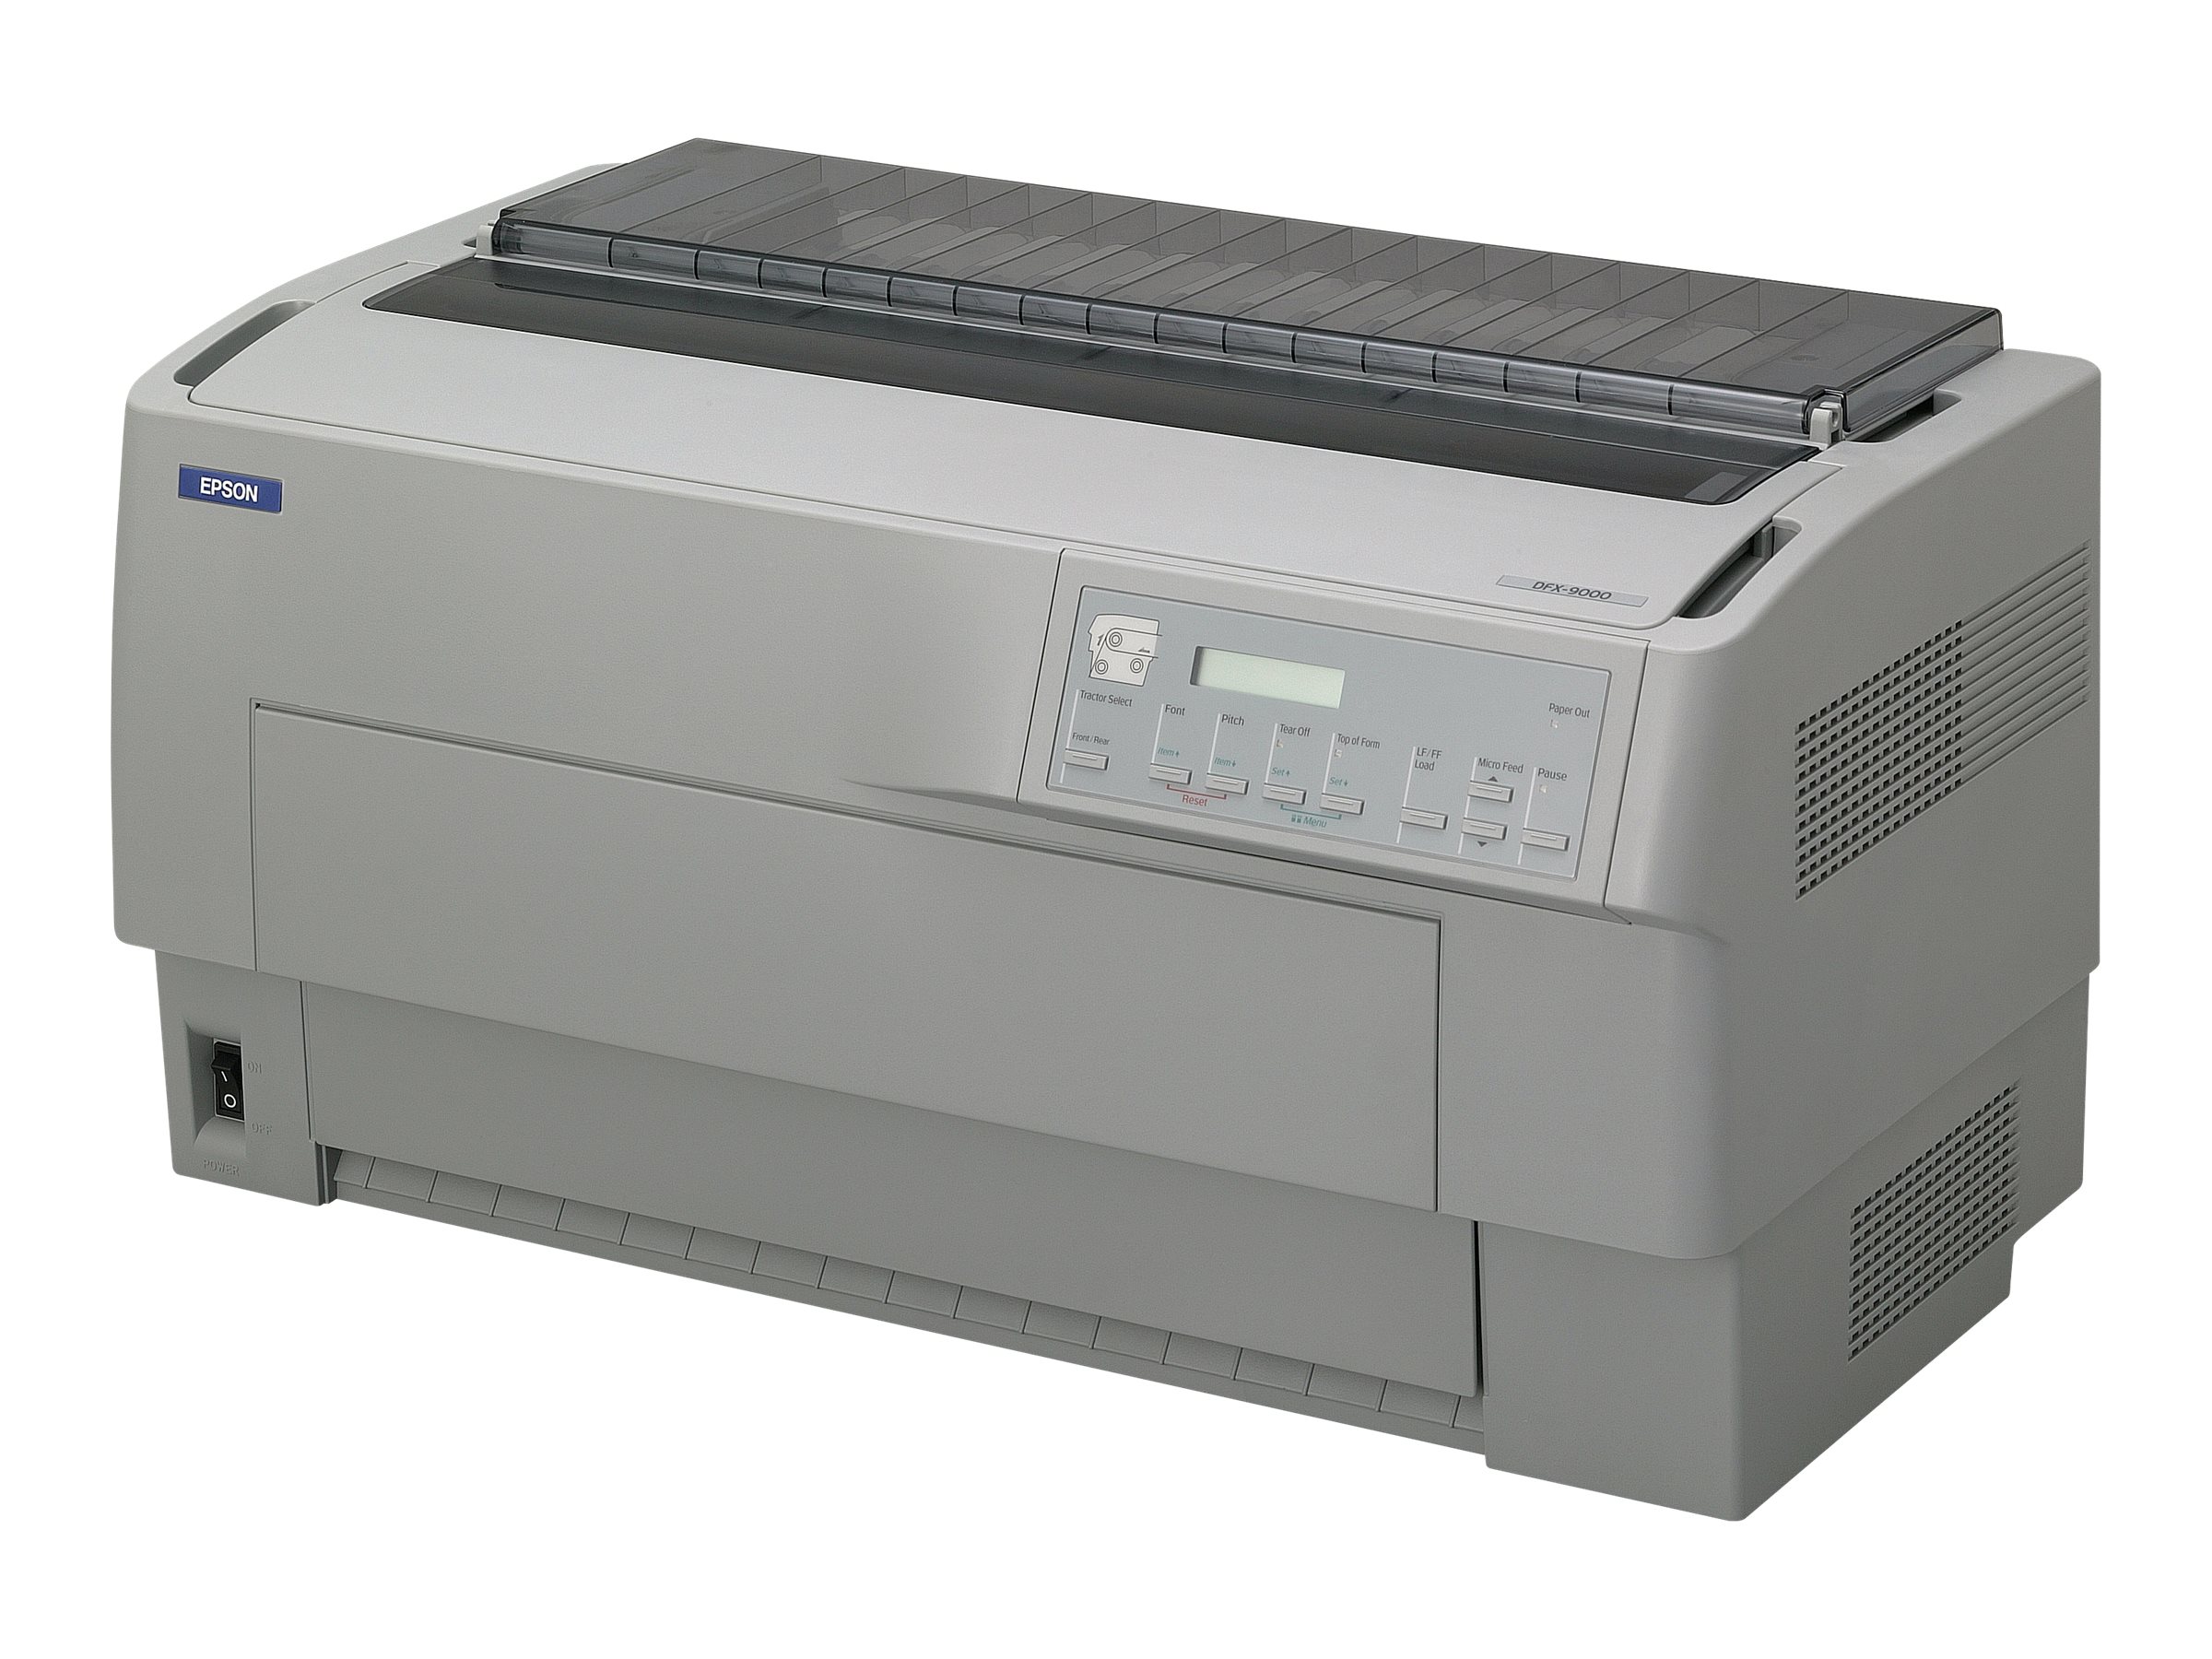 Epson DFX 9000 - Drucker - s/w - Punktmatrix - Rolle (41,9 cm)